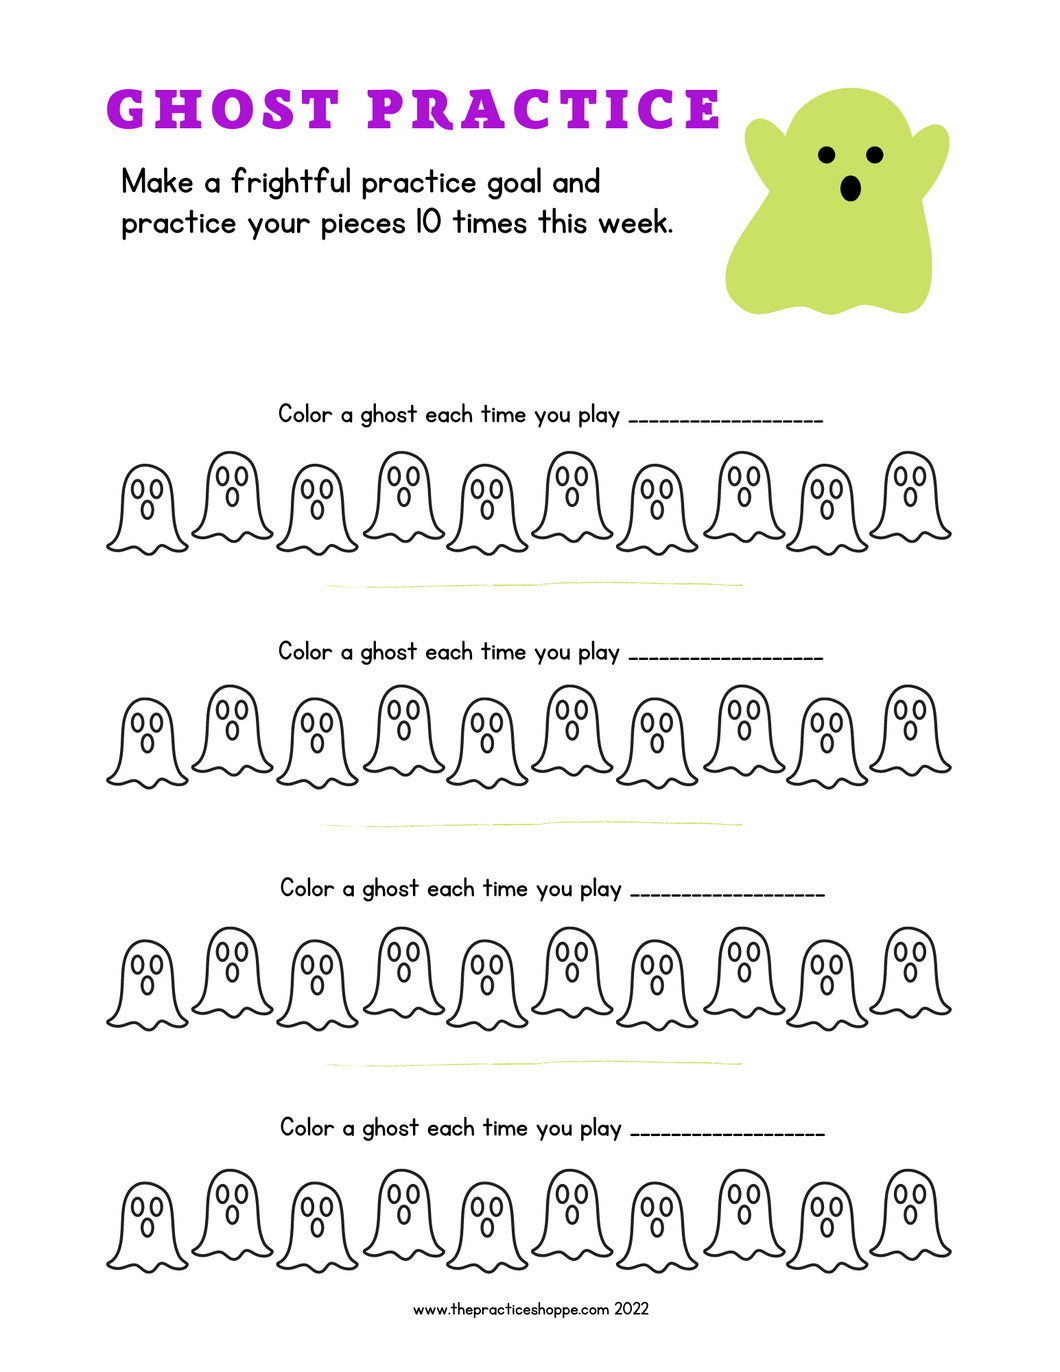 Ghost Practice Chart (digital download)